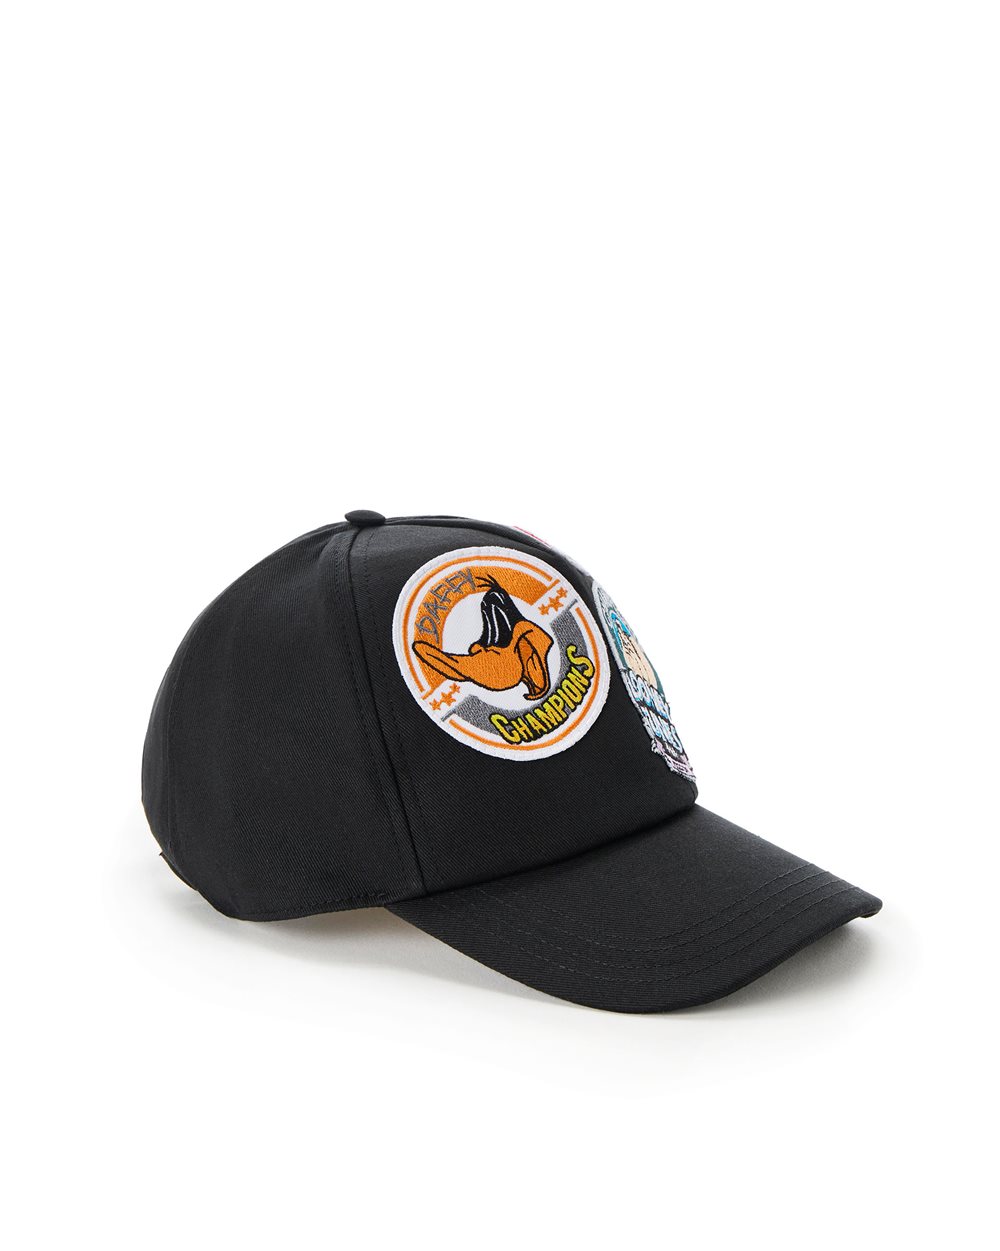 Baseball cap with cartoon patches and logo -  ( PRIMO STEP DE ) PROMO SALDI UP TO 40% | Iceberg - Official Website